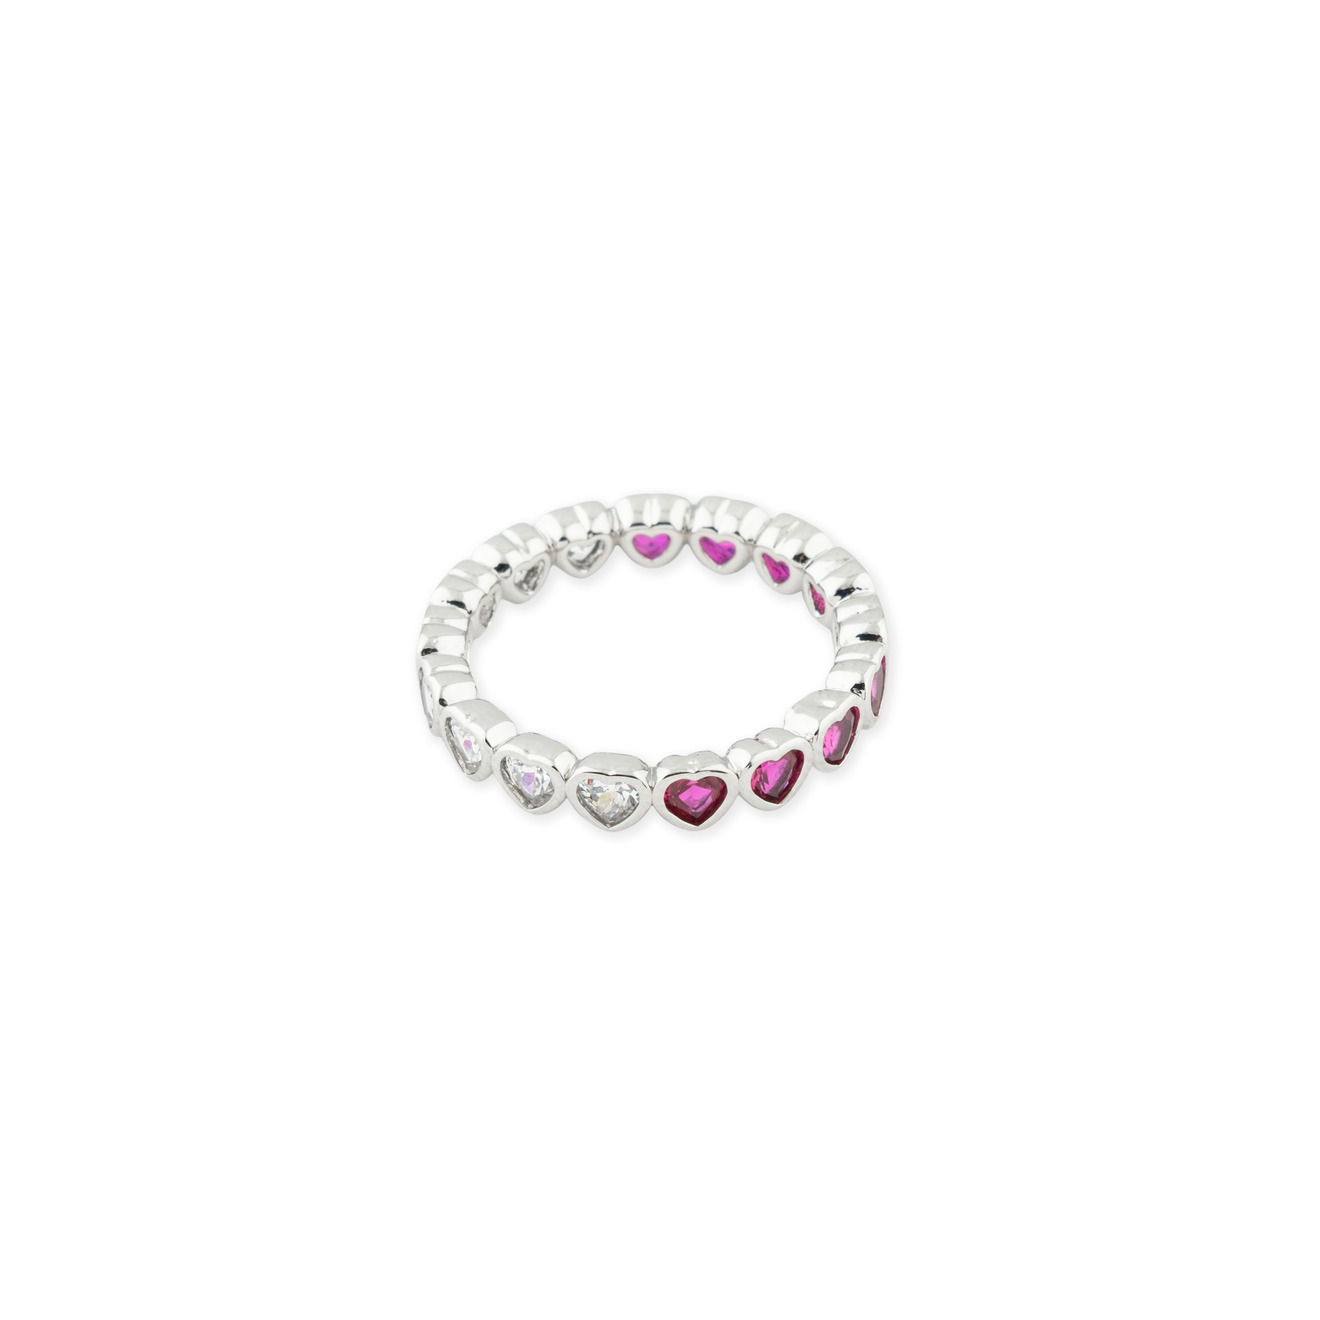 Herald Percy Серебристое кольцо из сердец с белыми и розовыми кристаллами herald percy серебристое кольцо из сердец с белыми и розовыми кристаллами